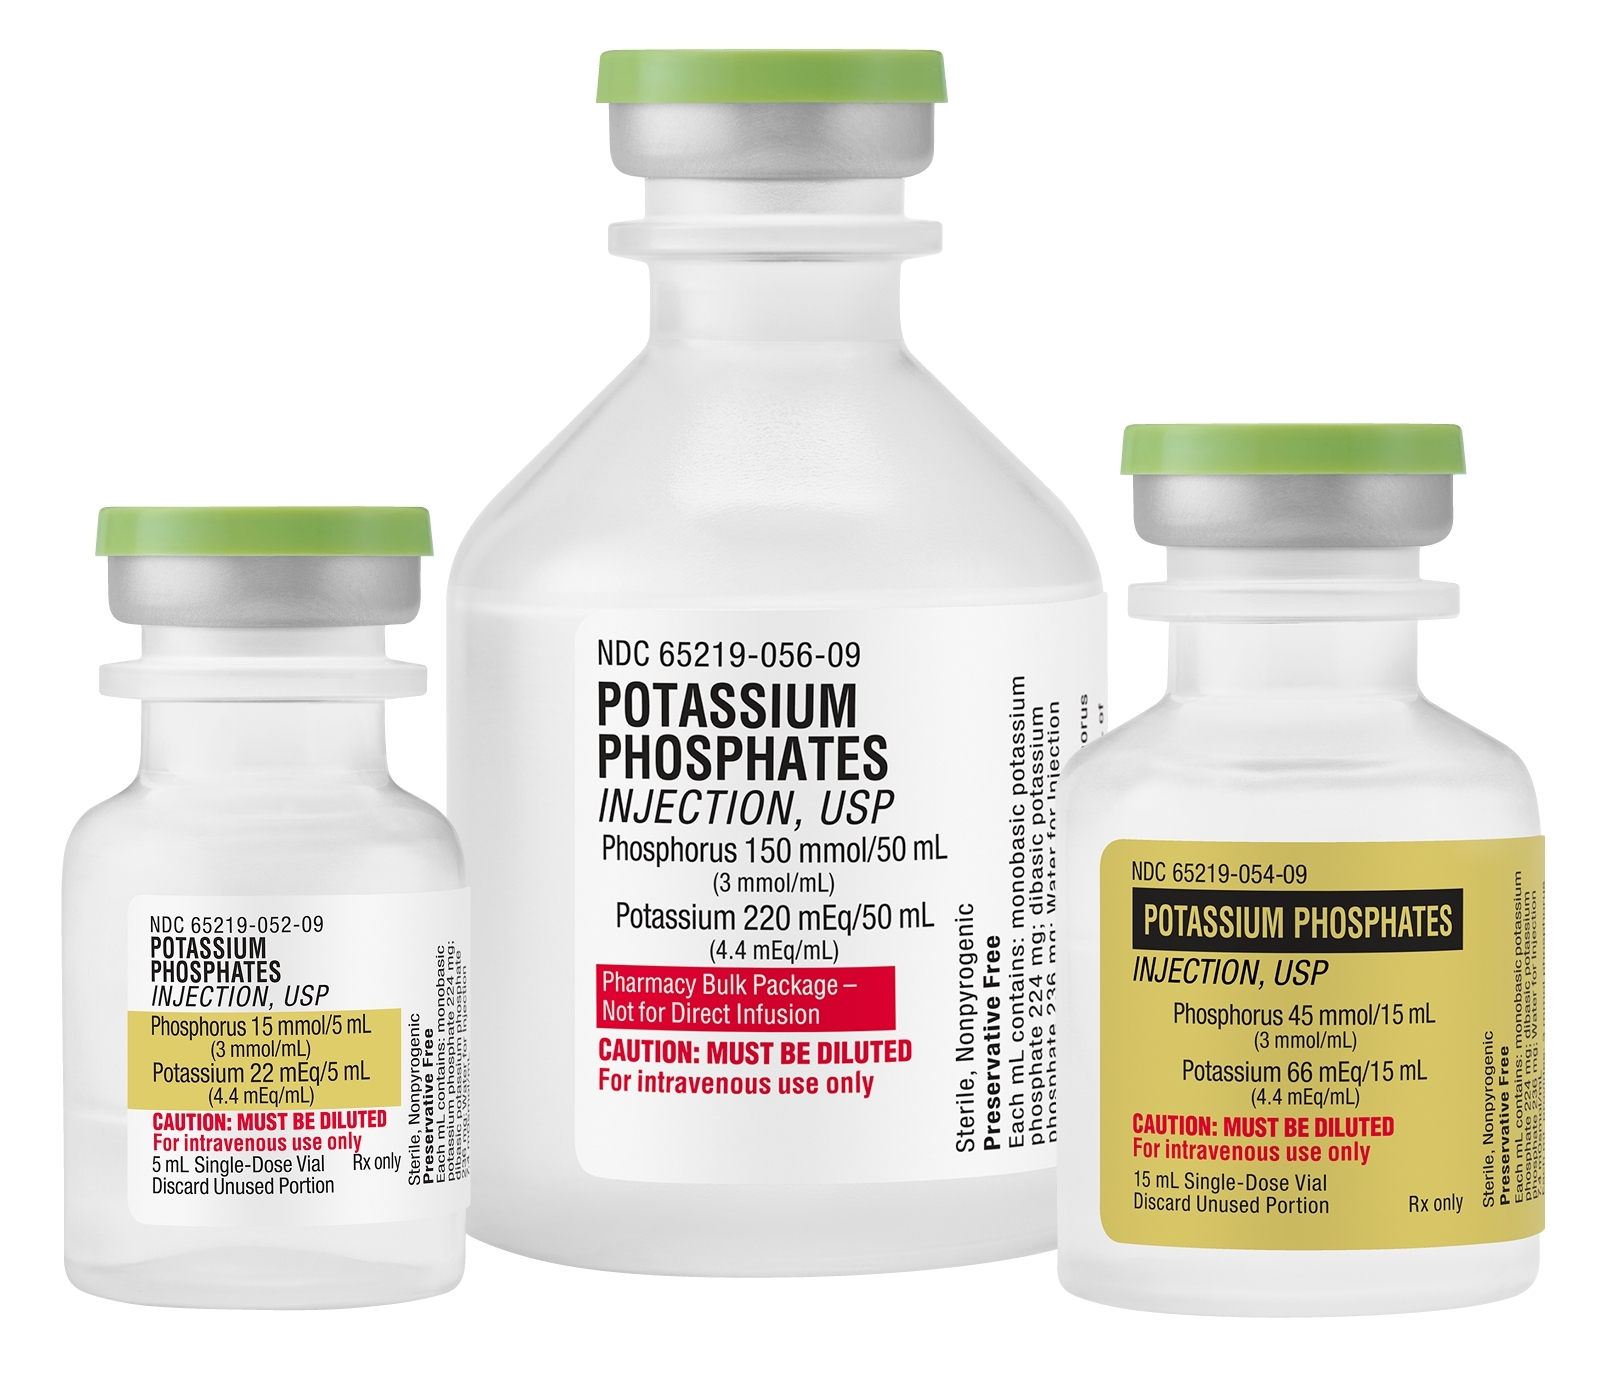 Fresenius Kabi Announces Availability of Potassium Phosphates Injection,  USP in Three Presentations